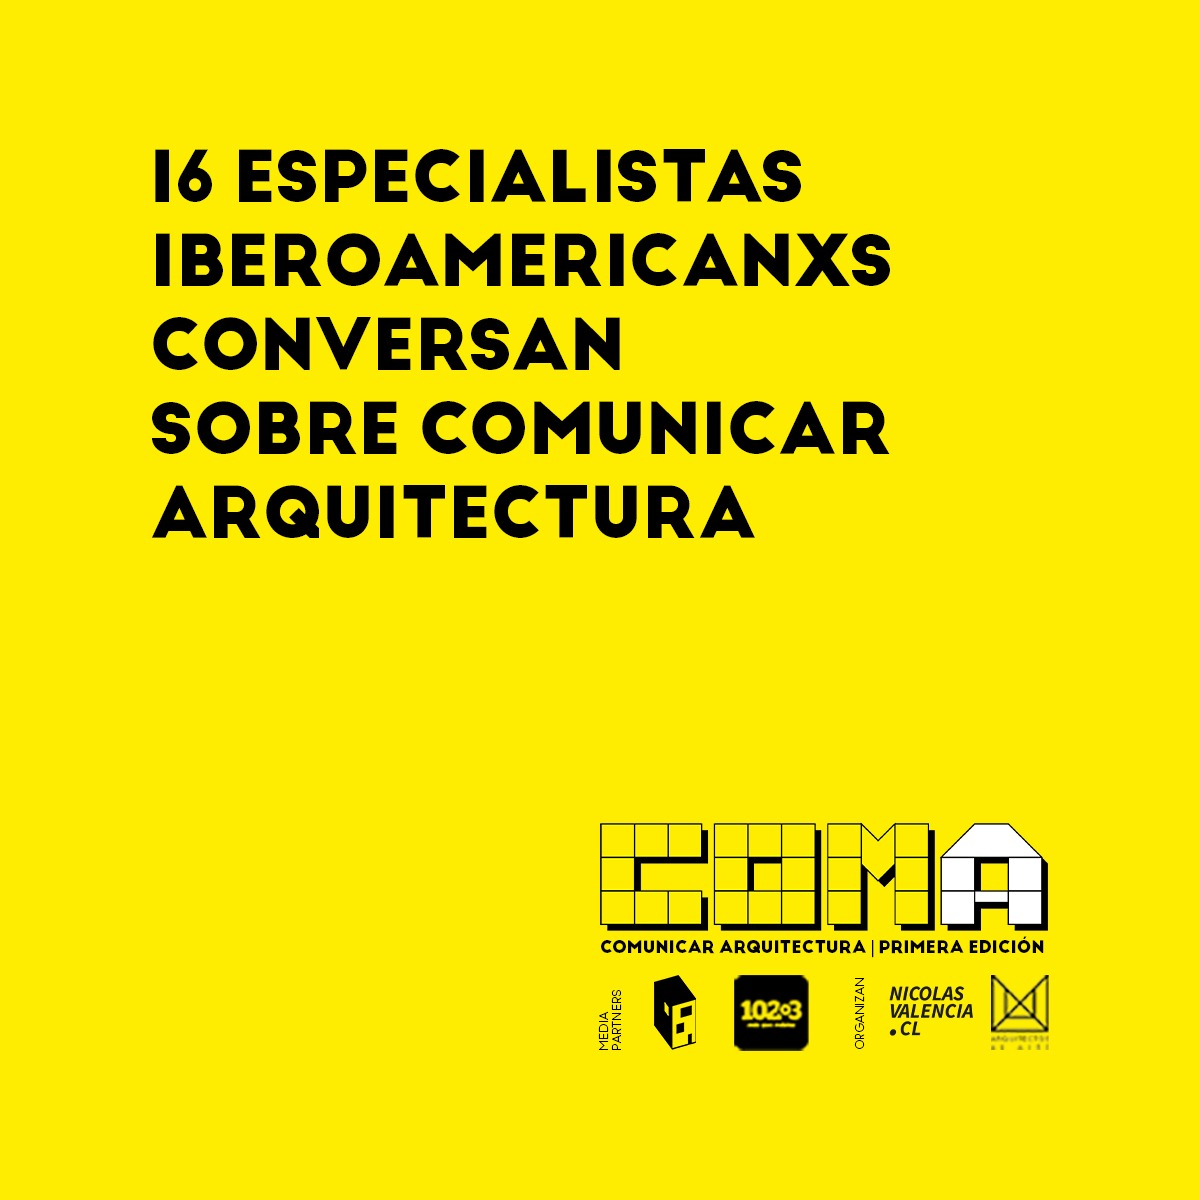 COMA, Comunicar Arquitectura